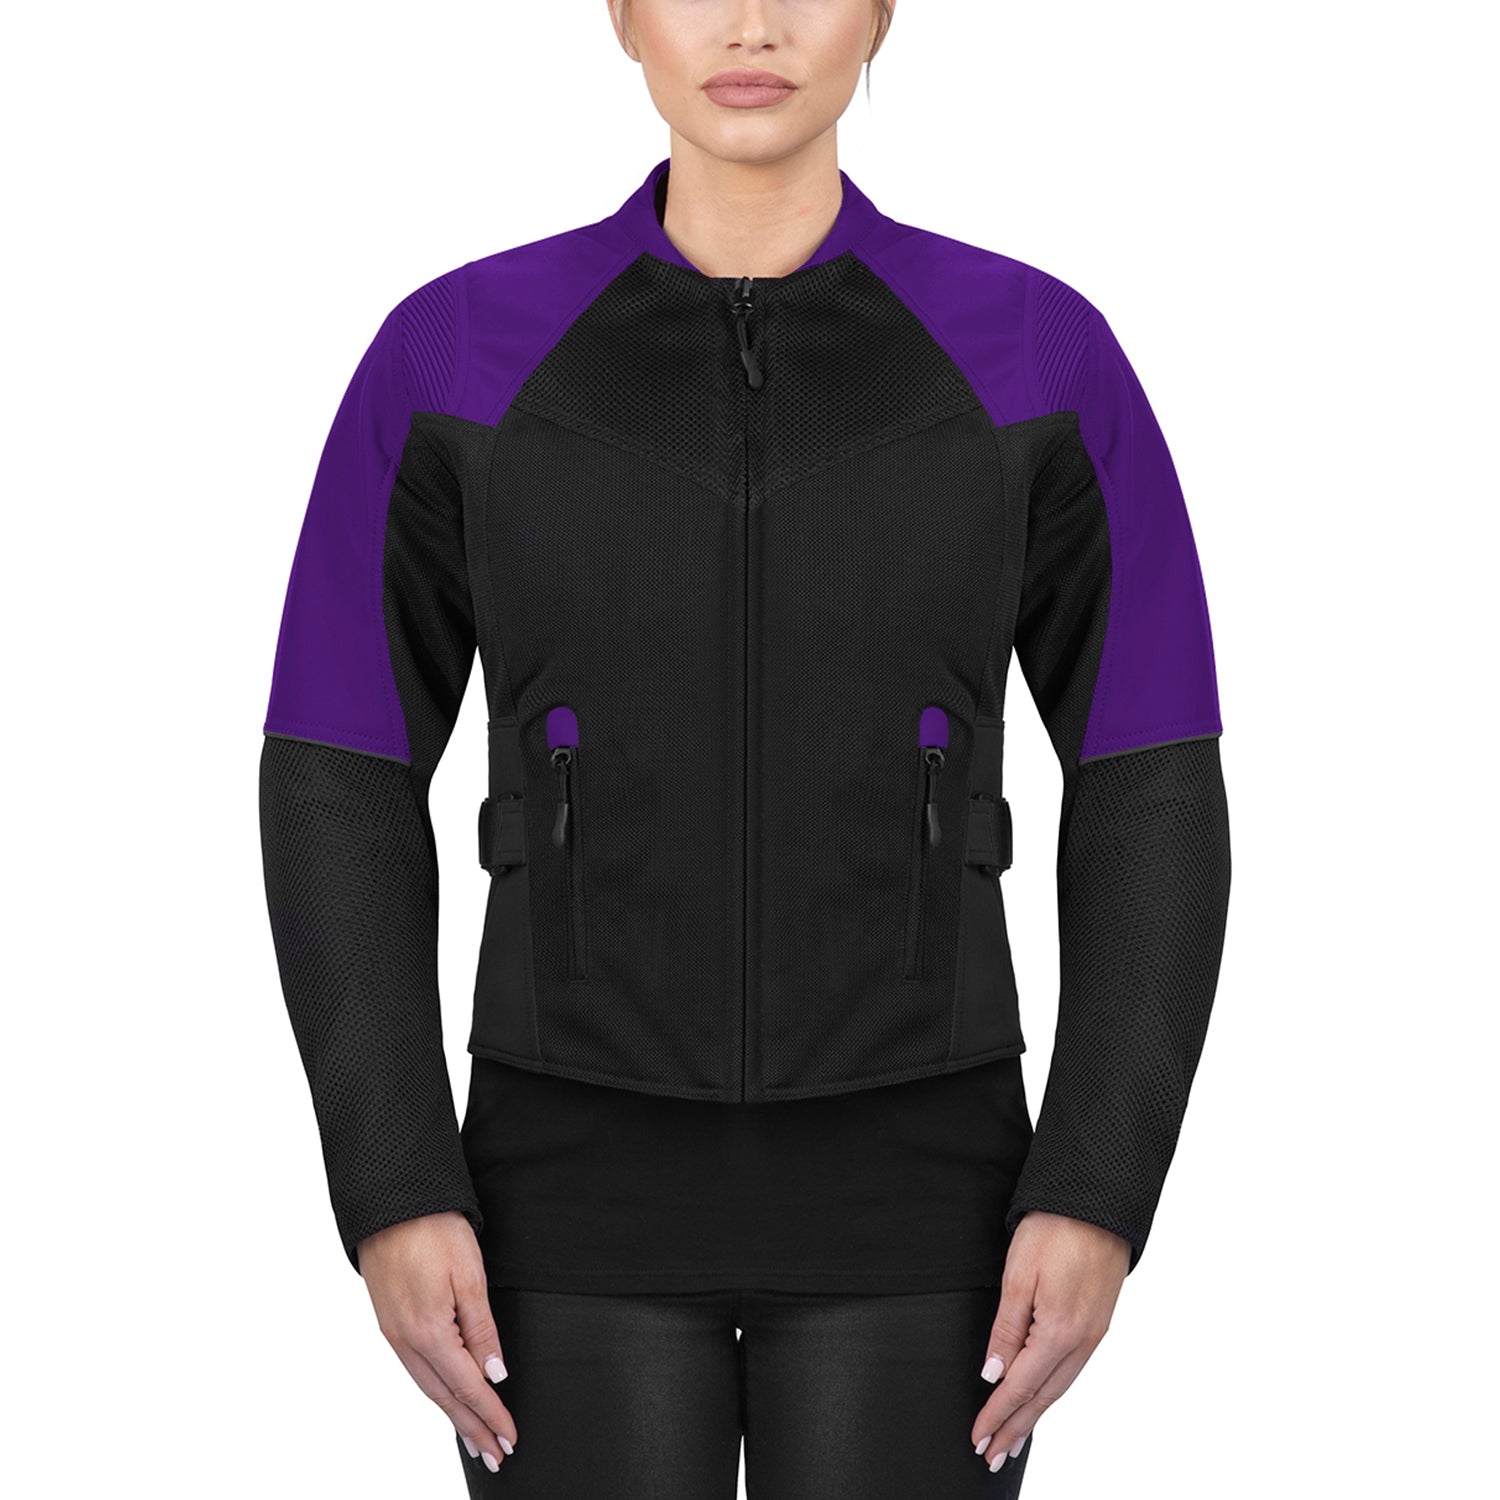 Marika Tek Performance Jacket - Black with Purple Detailing